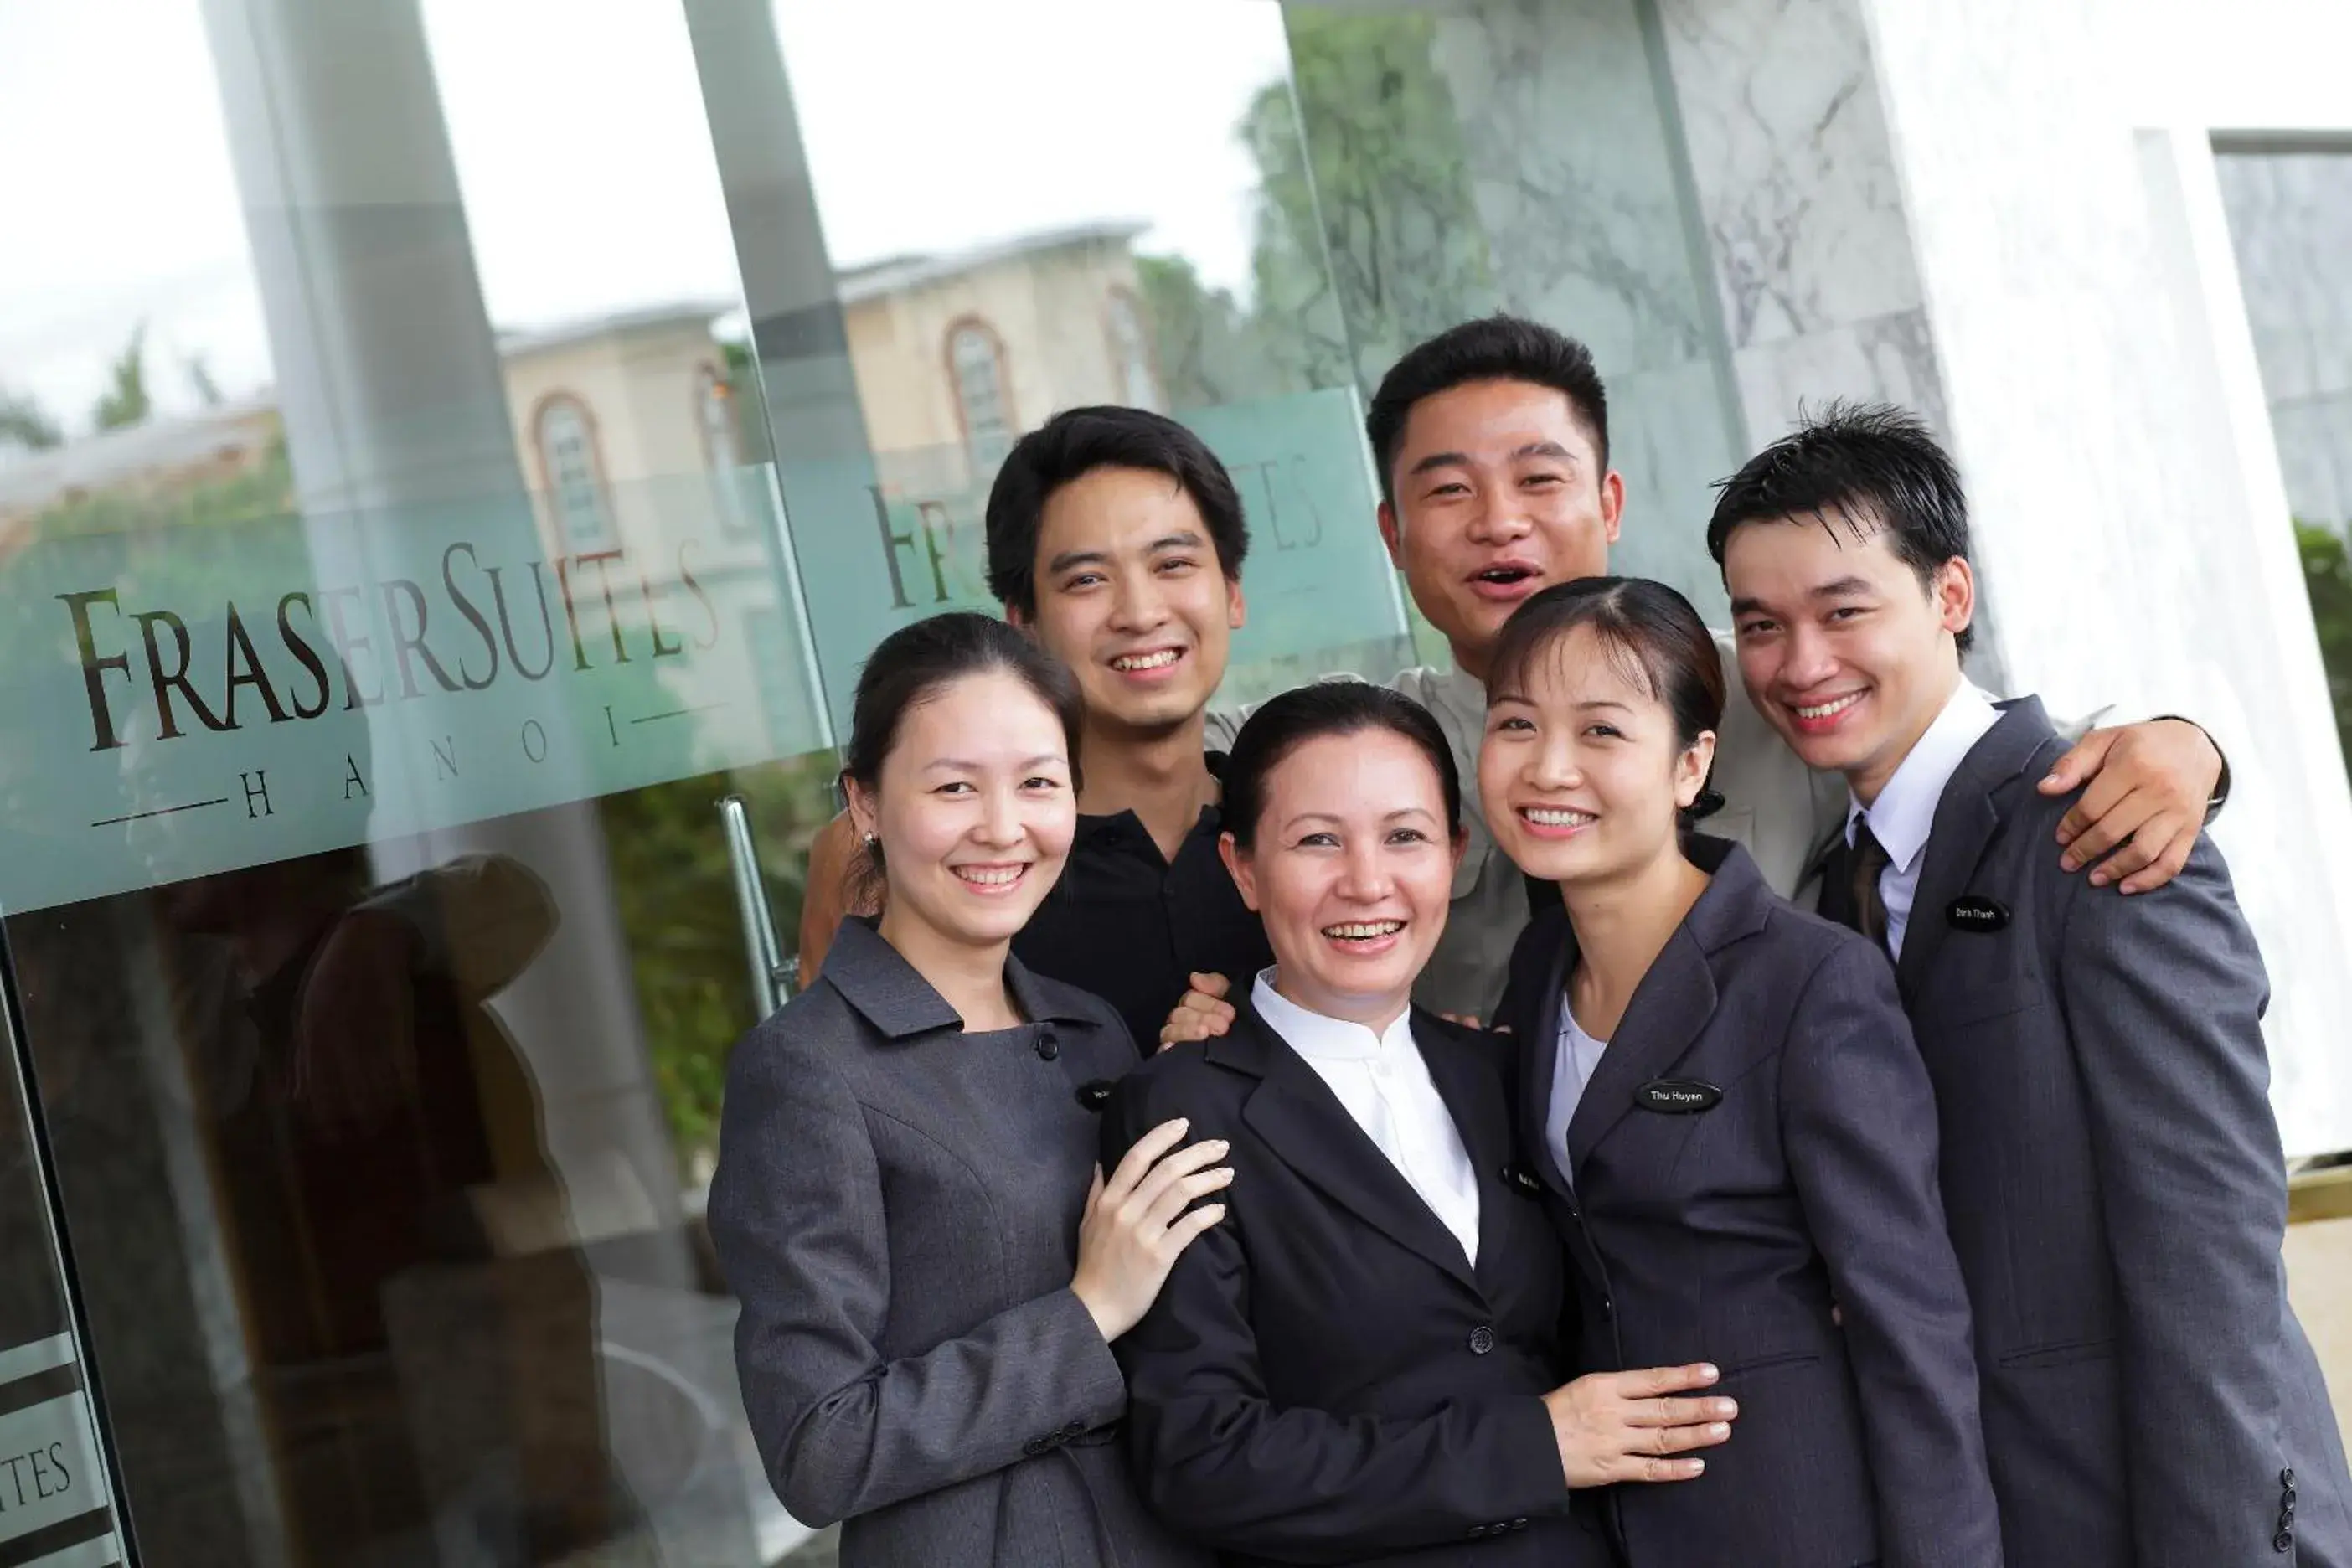 Staff in Fraser Suites Hanoi